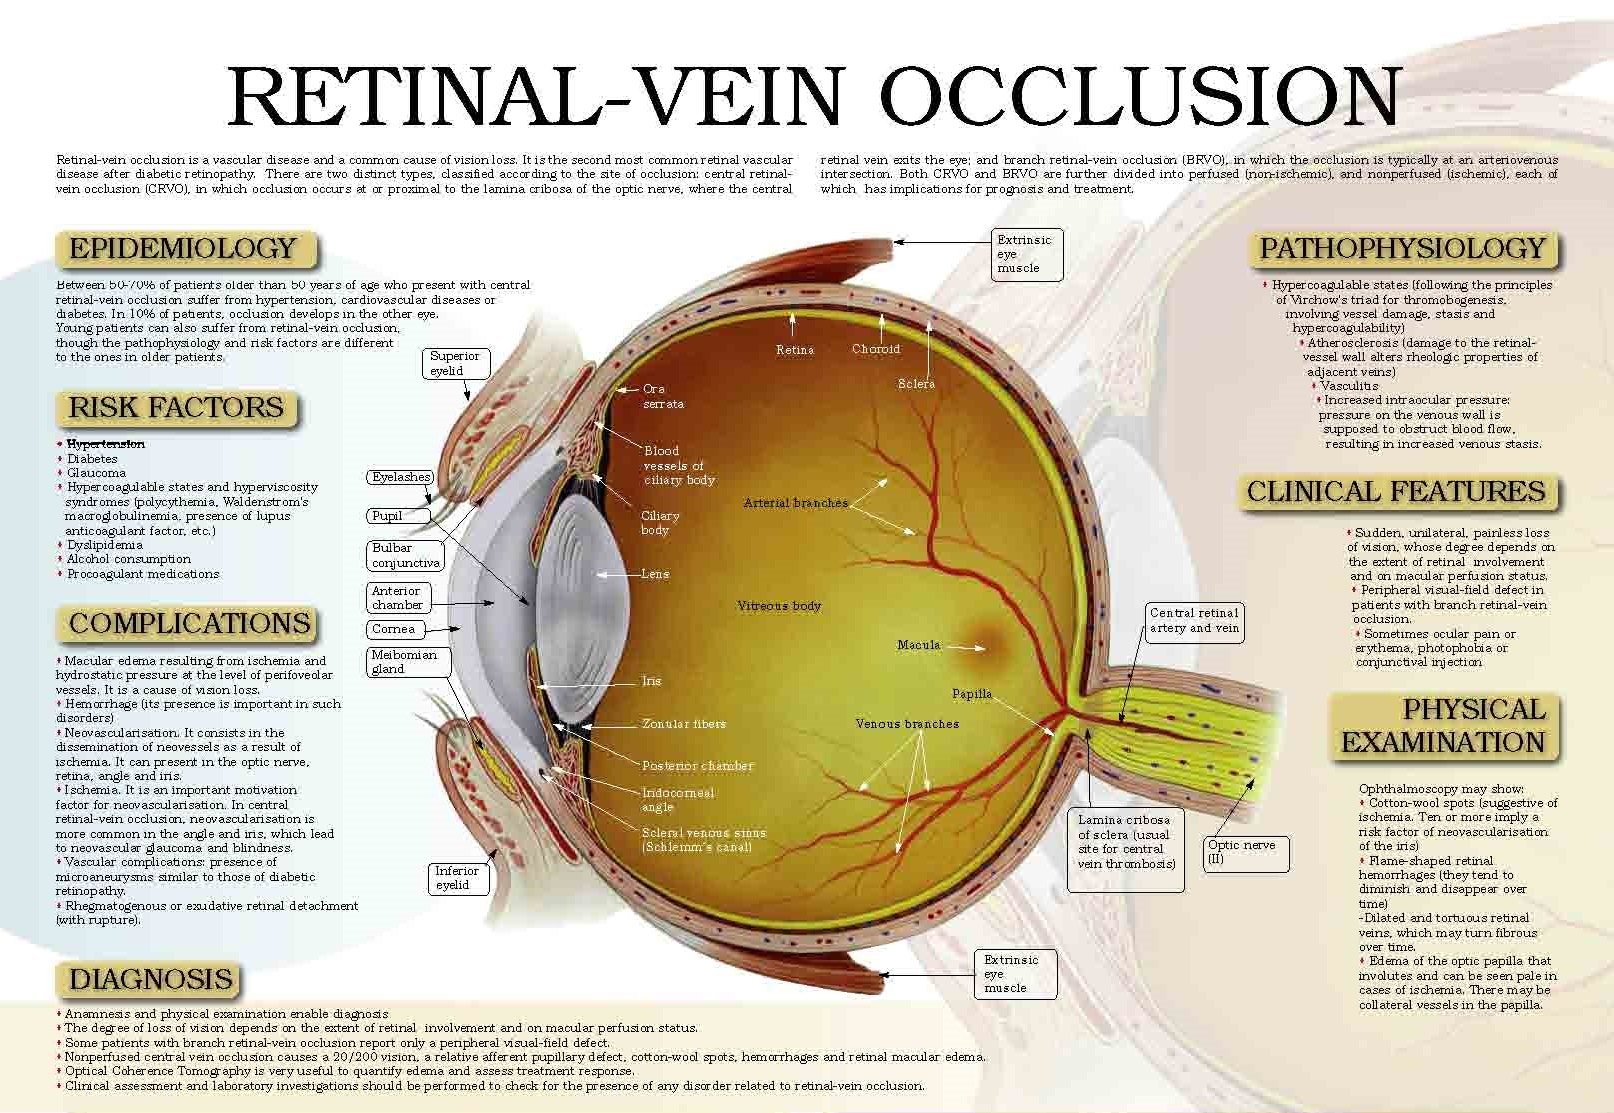 retinal-vein-occlusion-2.jpg